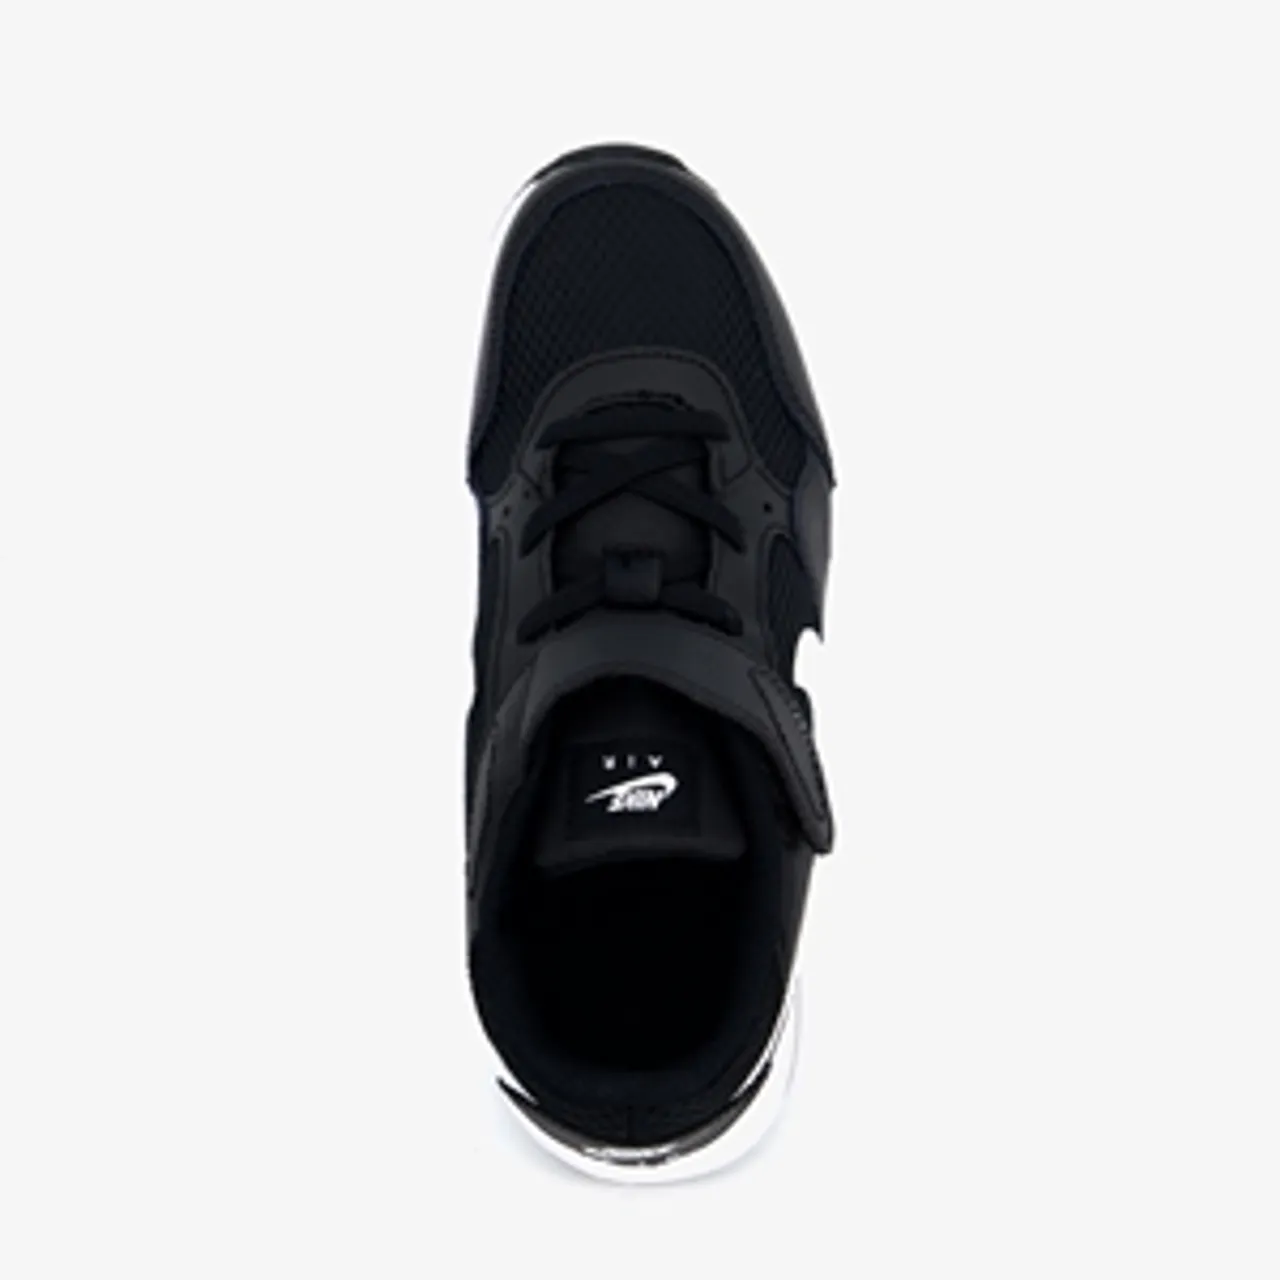 Nike Air Max SC kinder sneakers zwart/wit